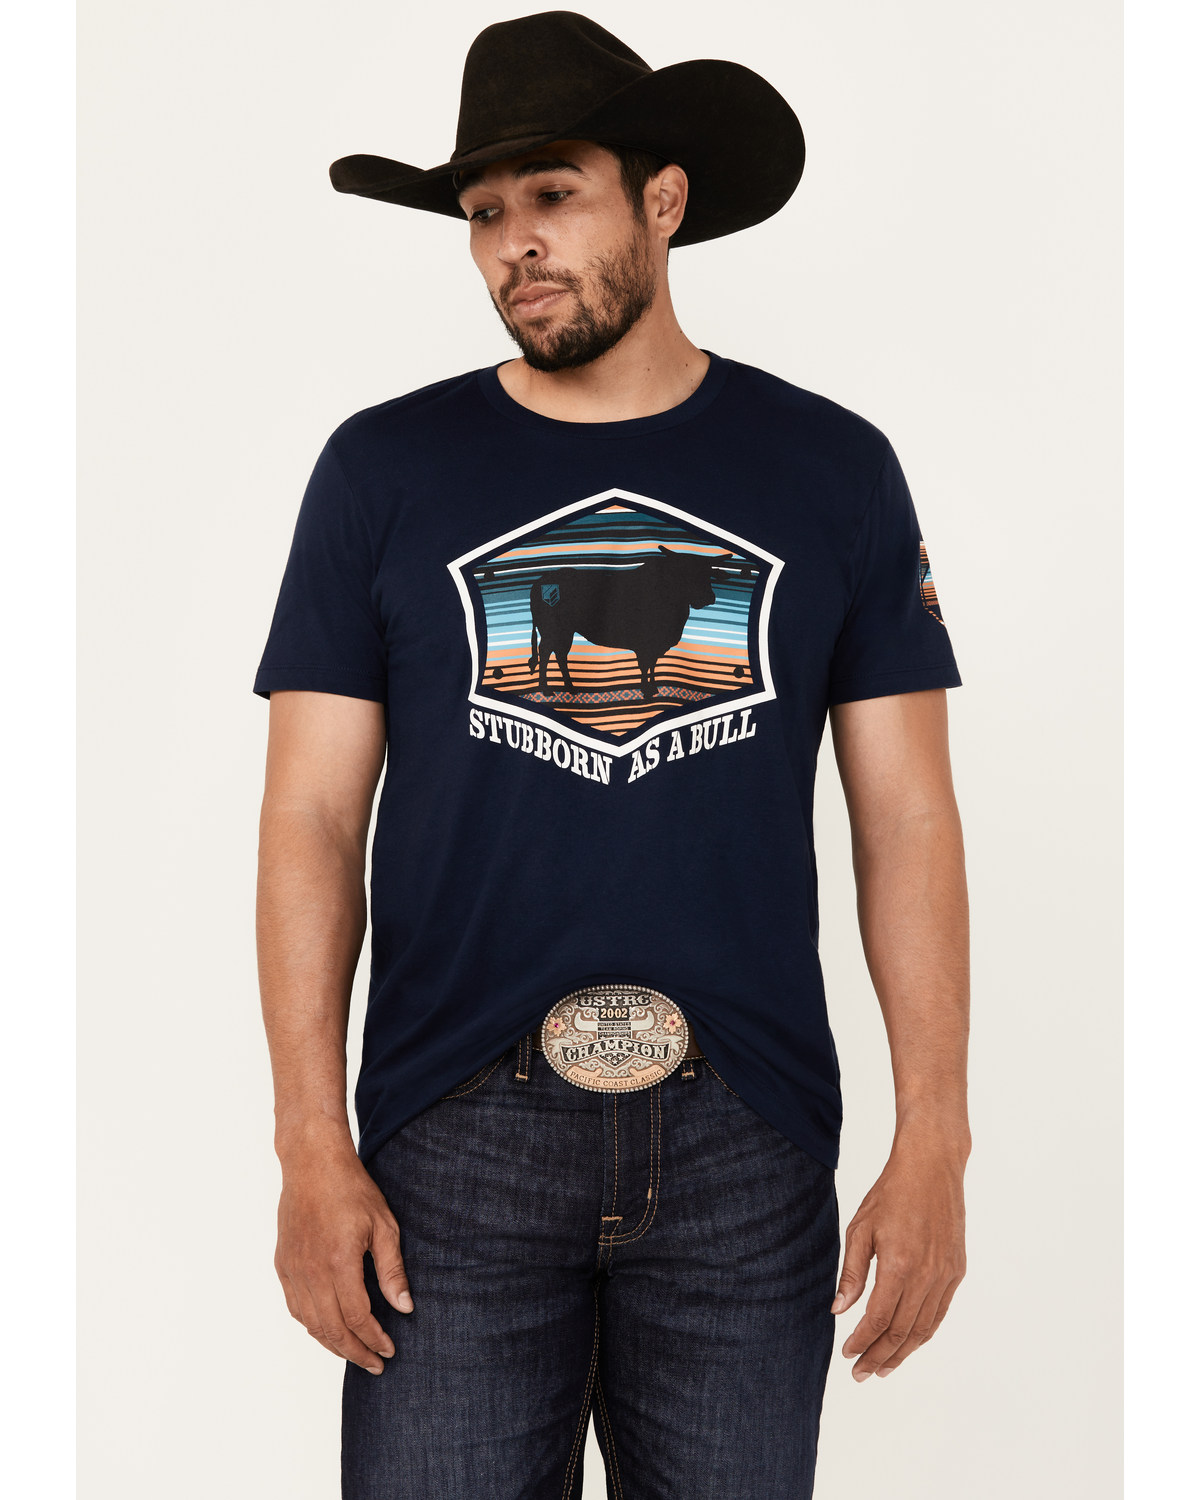 RANK 45® Men's Stubborn As A Bull Short Sleeve Graphic T-Shirt